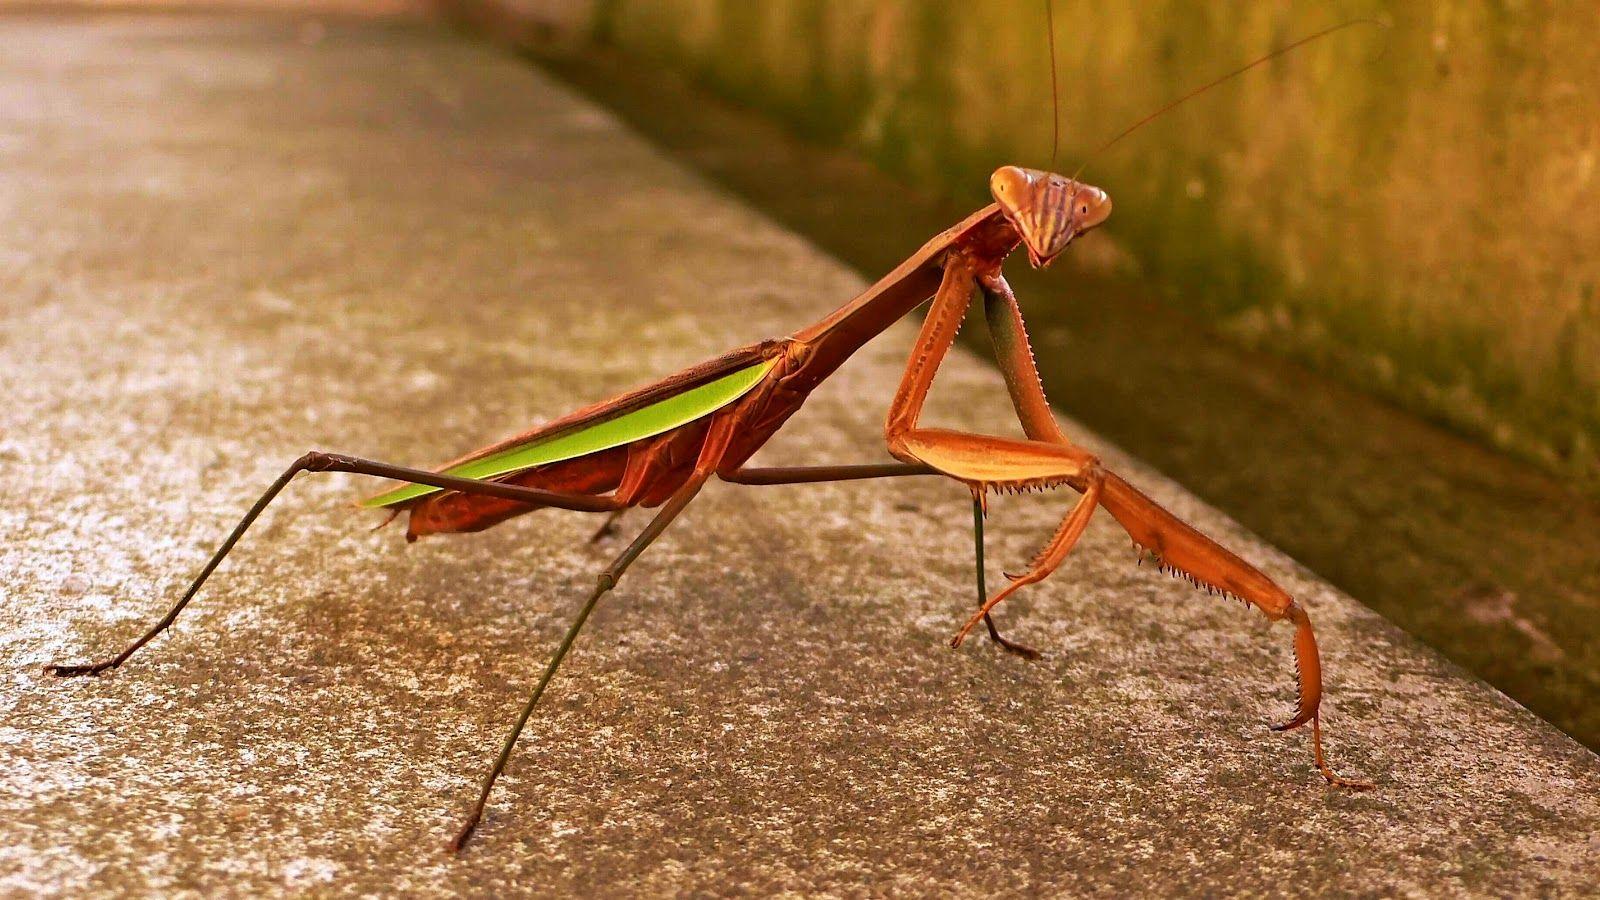 Praying Mantis. Insects. Praying Mantis, Insects and Pray